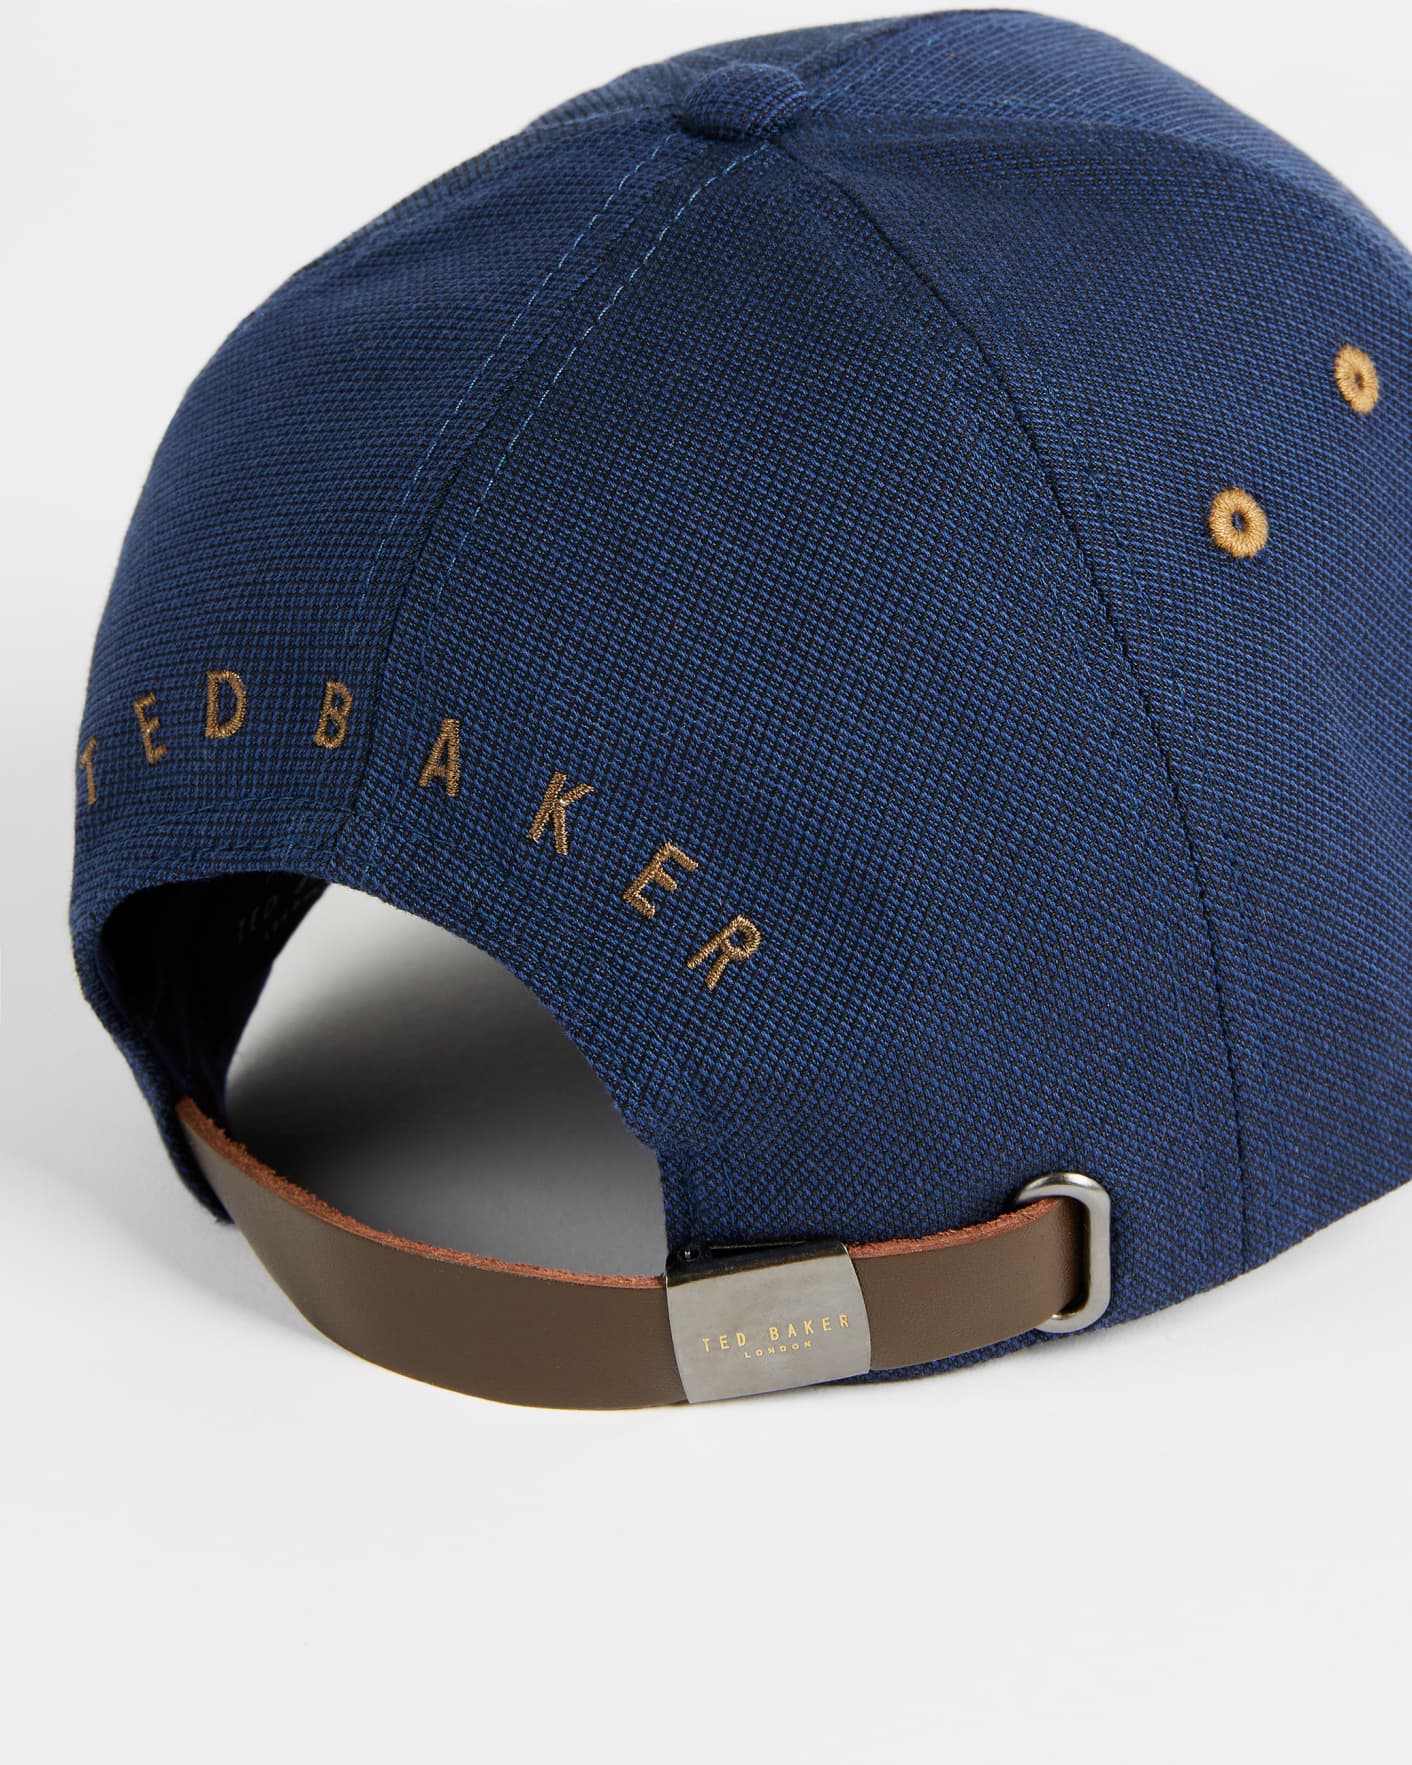 MONEI NAVY Hats  Caps Ted Baker AU